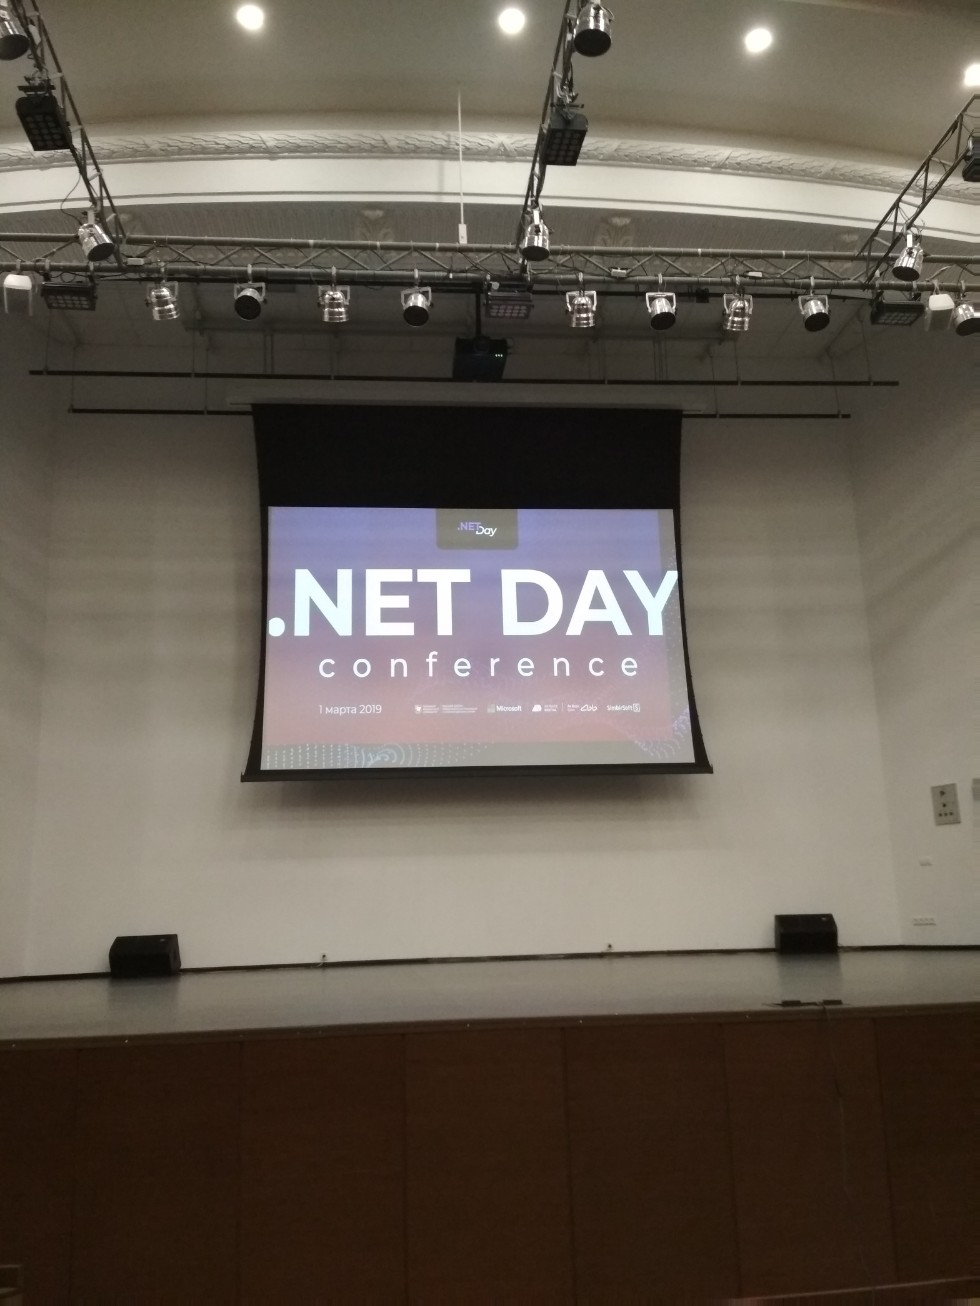       '.NET DAY 2019'